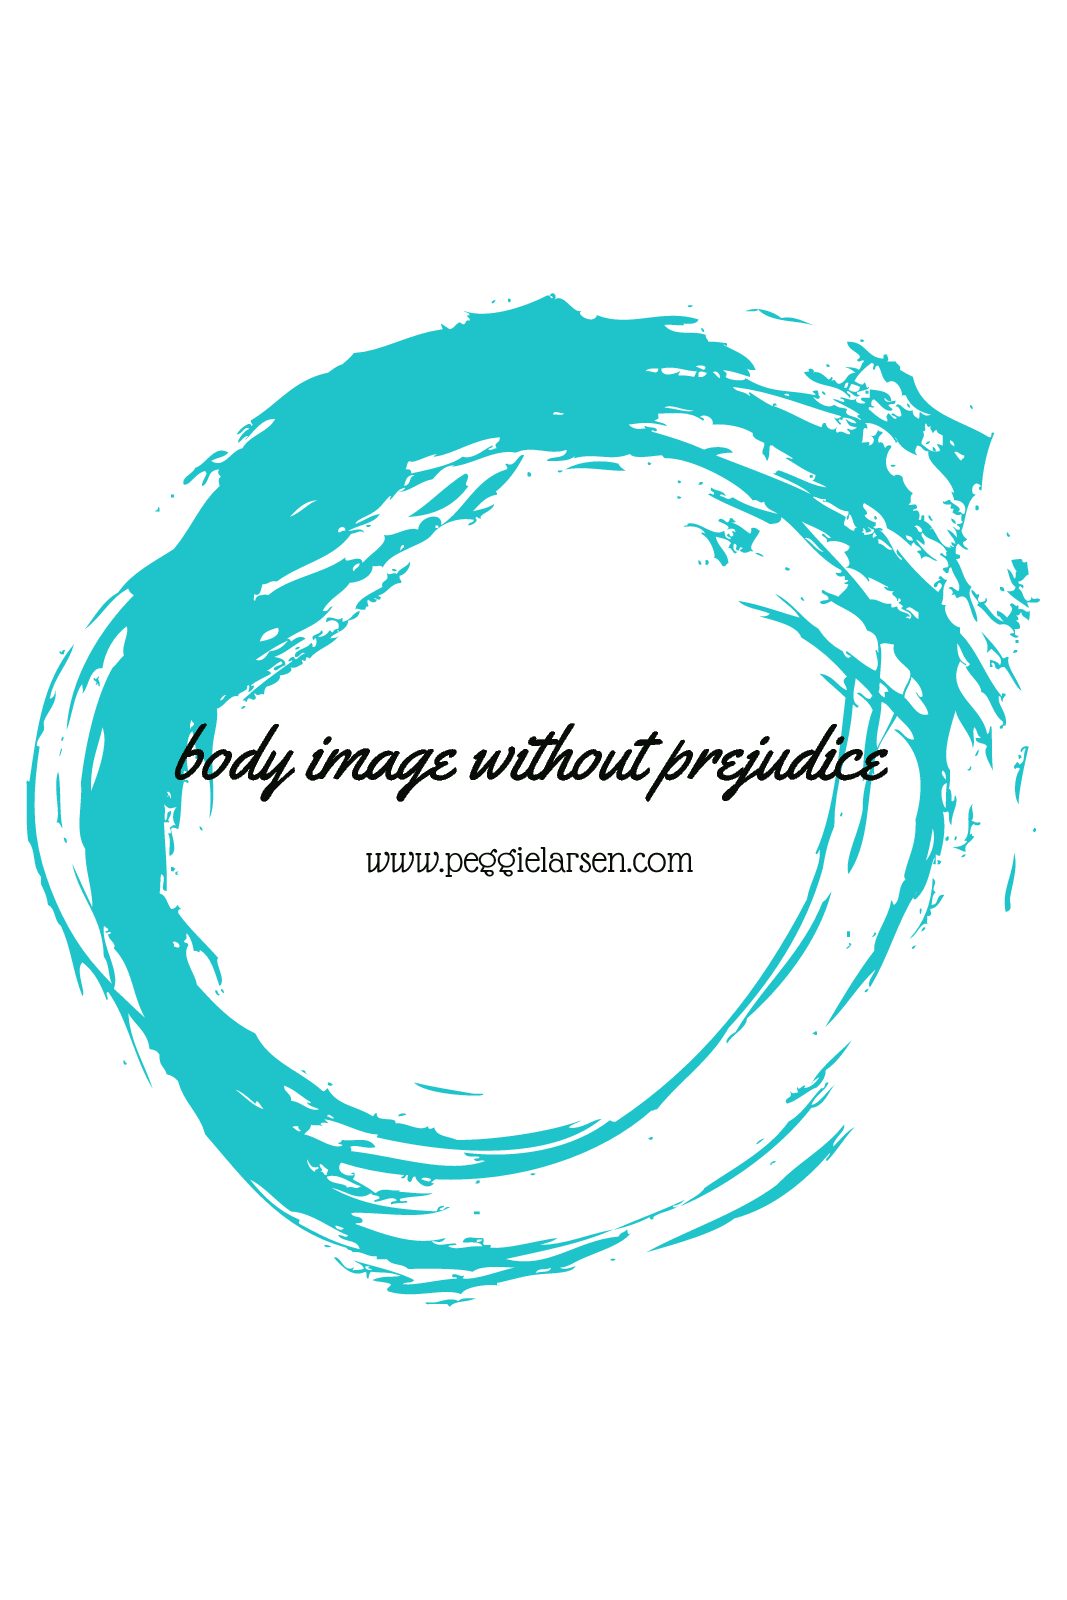 Body Image Without Prejudice